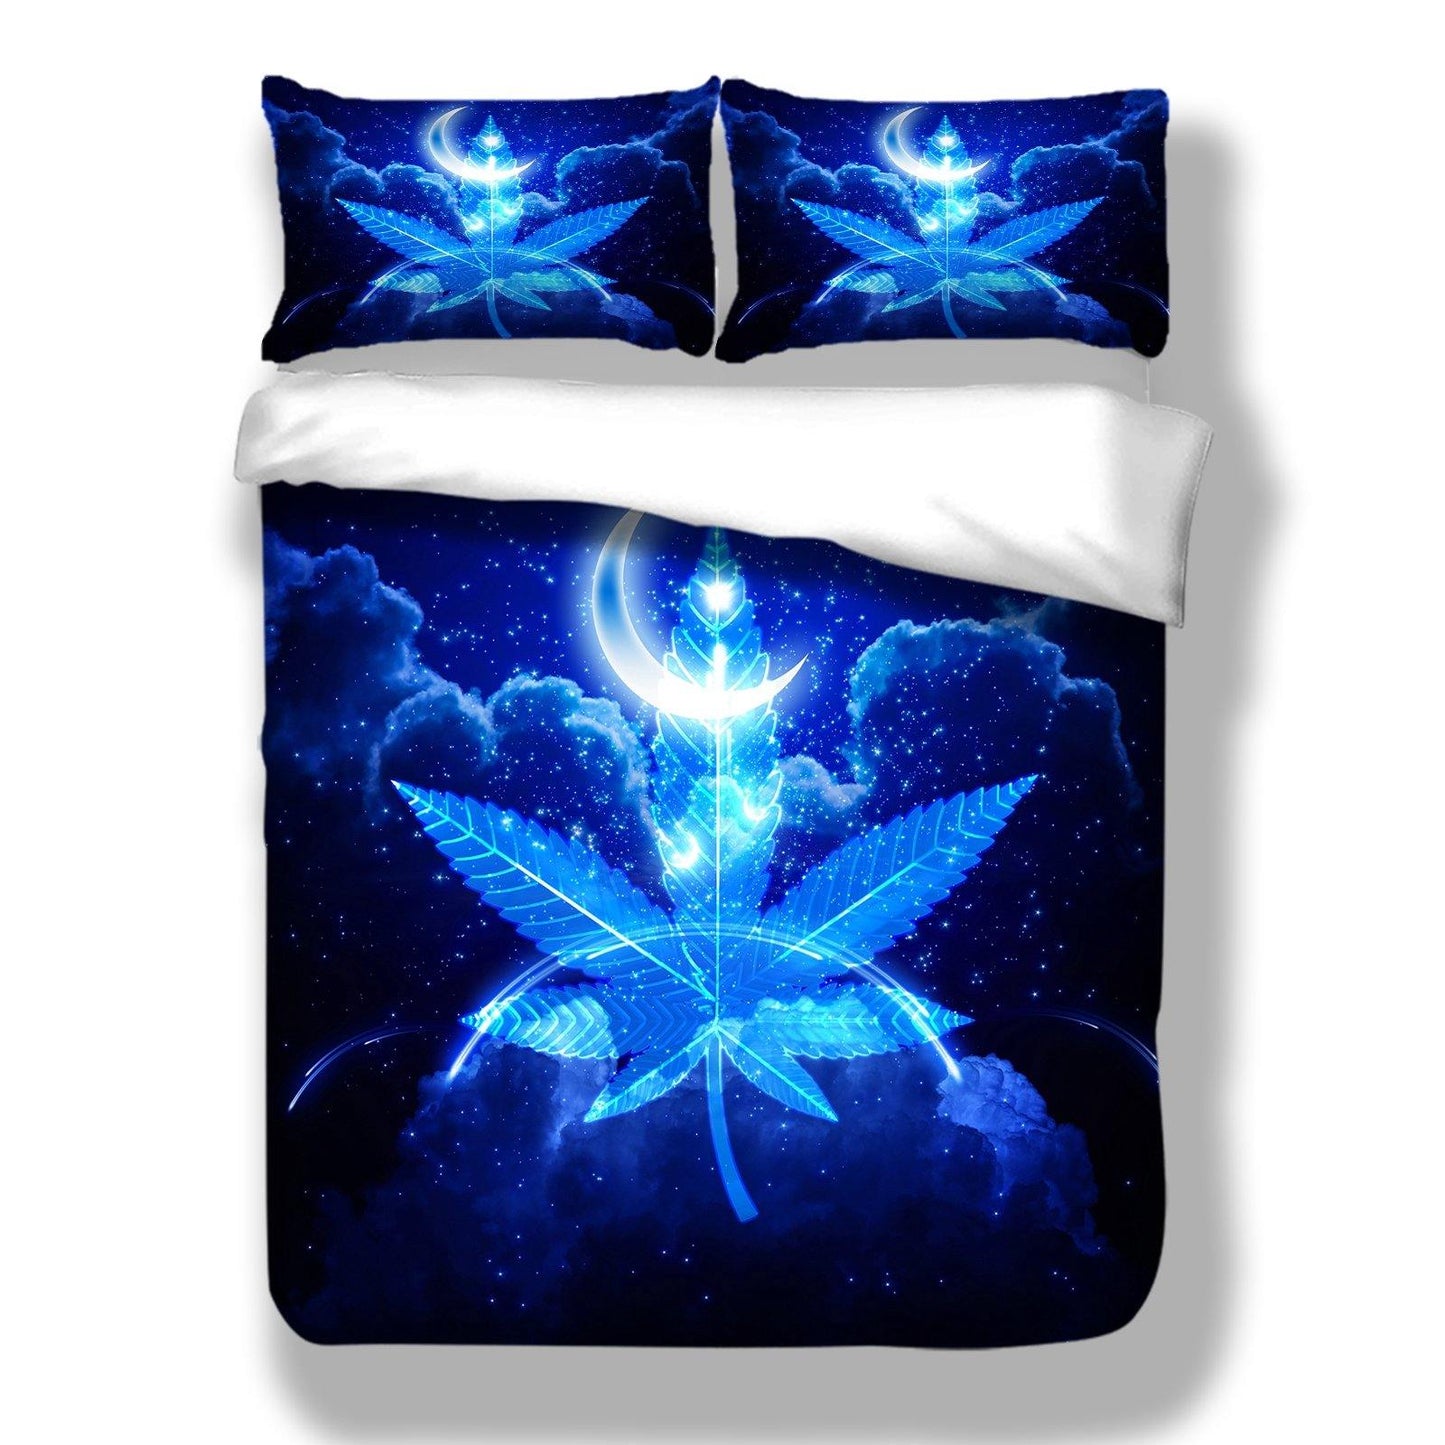 WONGS BEDDING Blue Moonlight Bedding Bedroom Home Kit - Wongs bedding